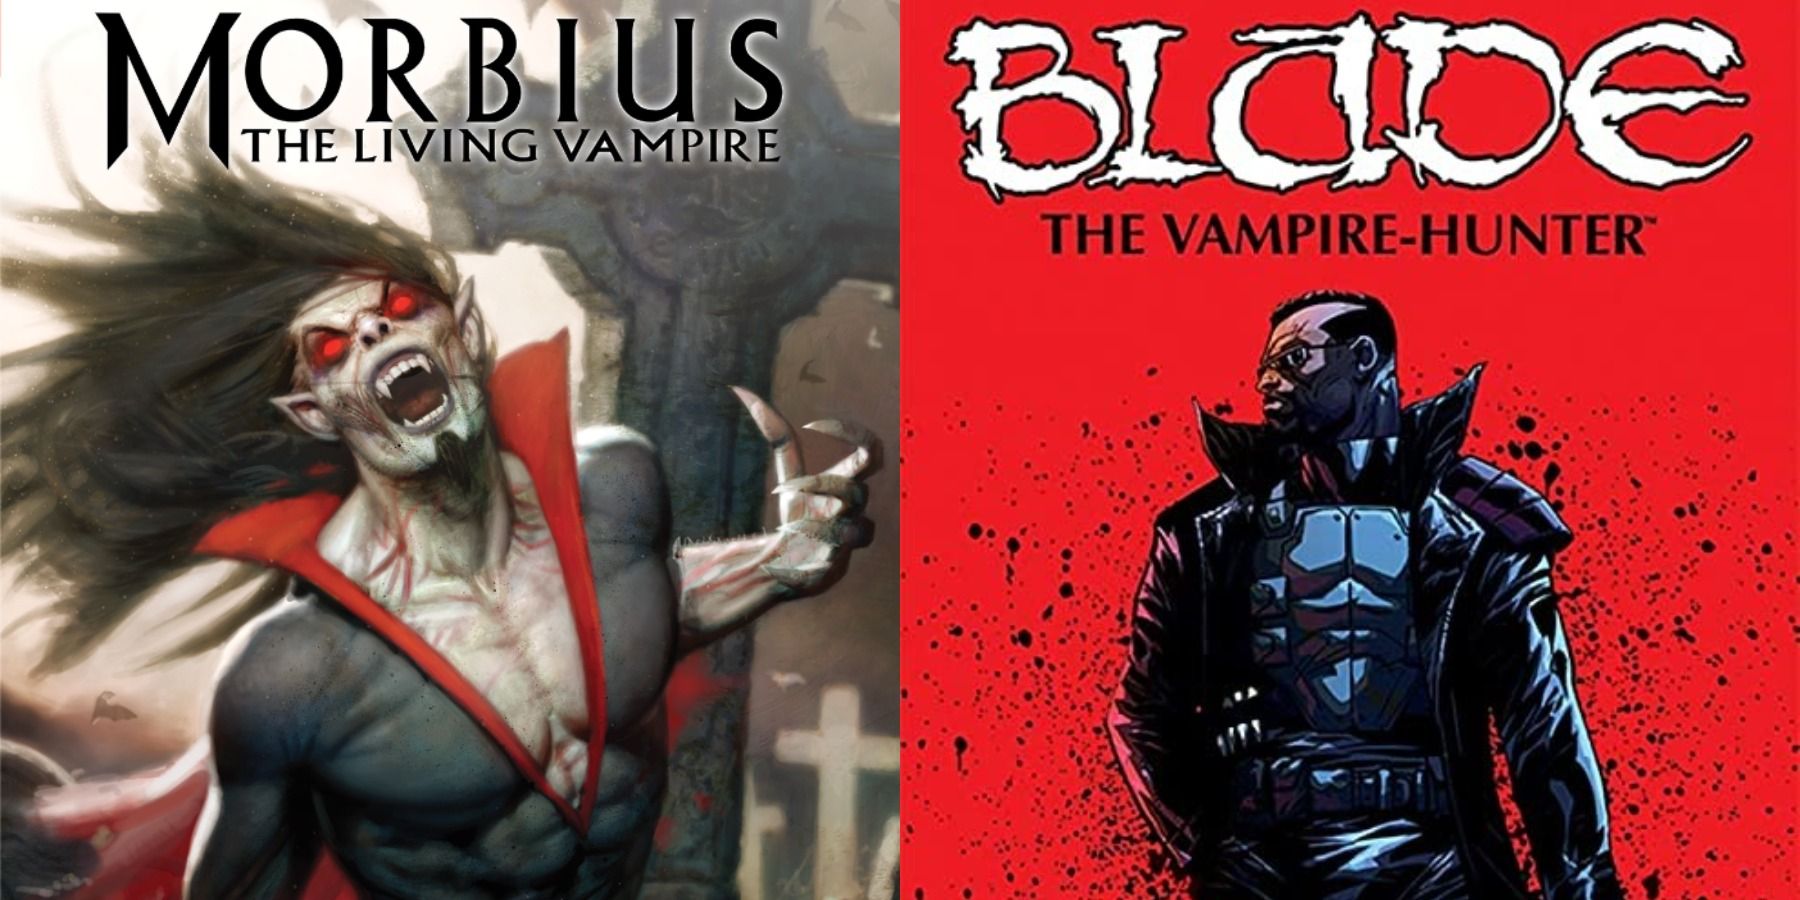 Blade comic and Morbius comic